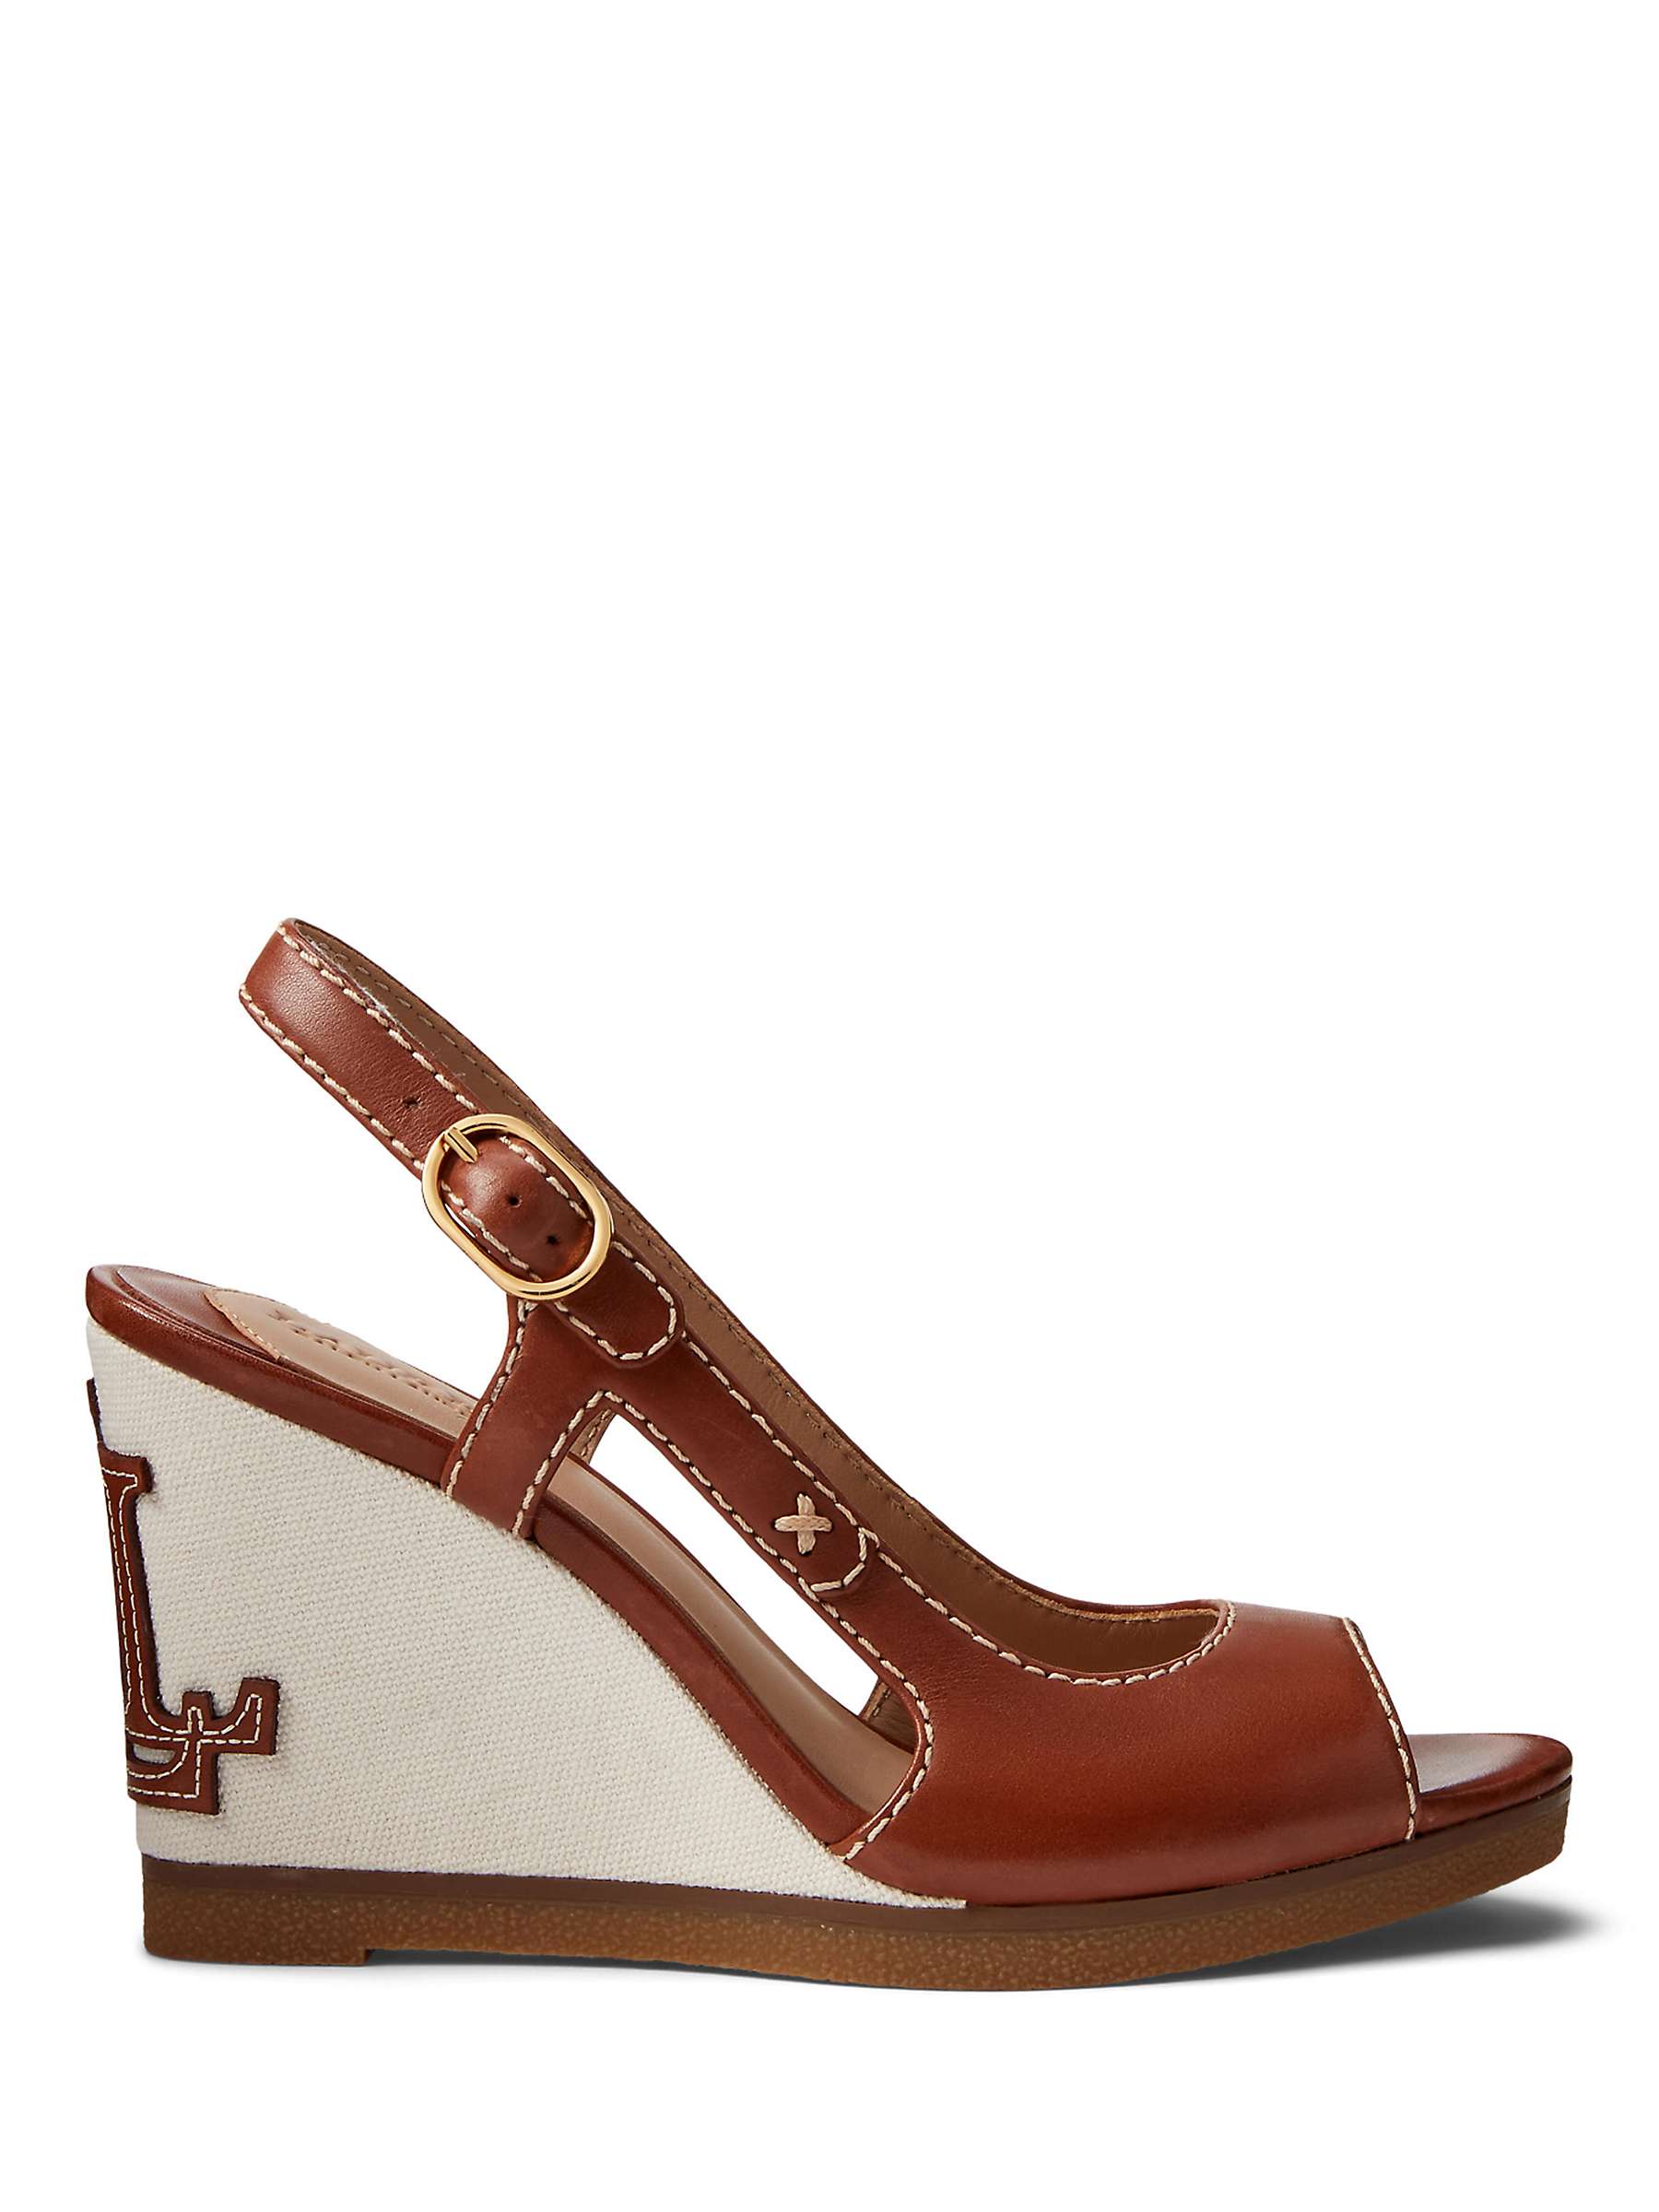 Buy Lauren Ralph Lauren Roni Leather Wedge Sandal Online at johnlewis.com